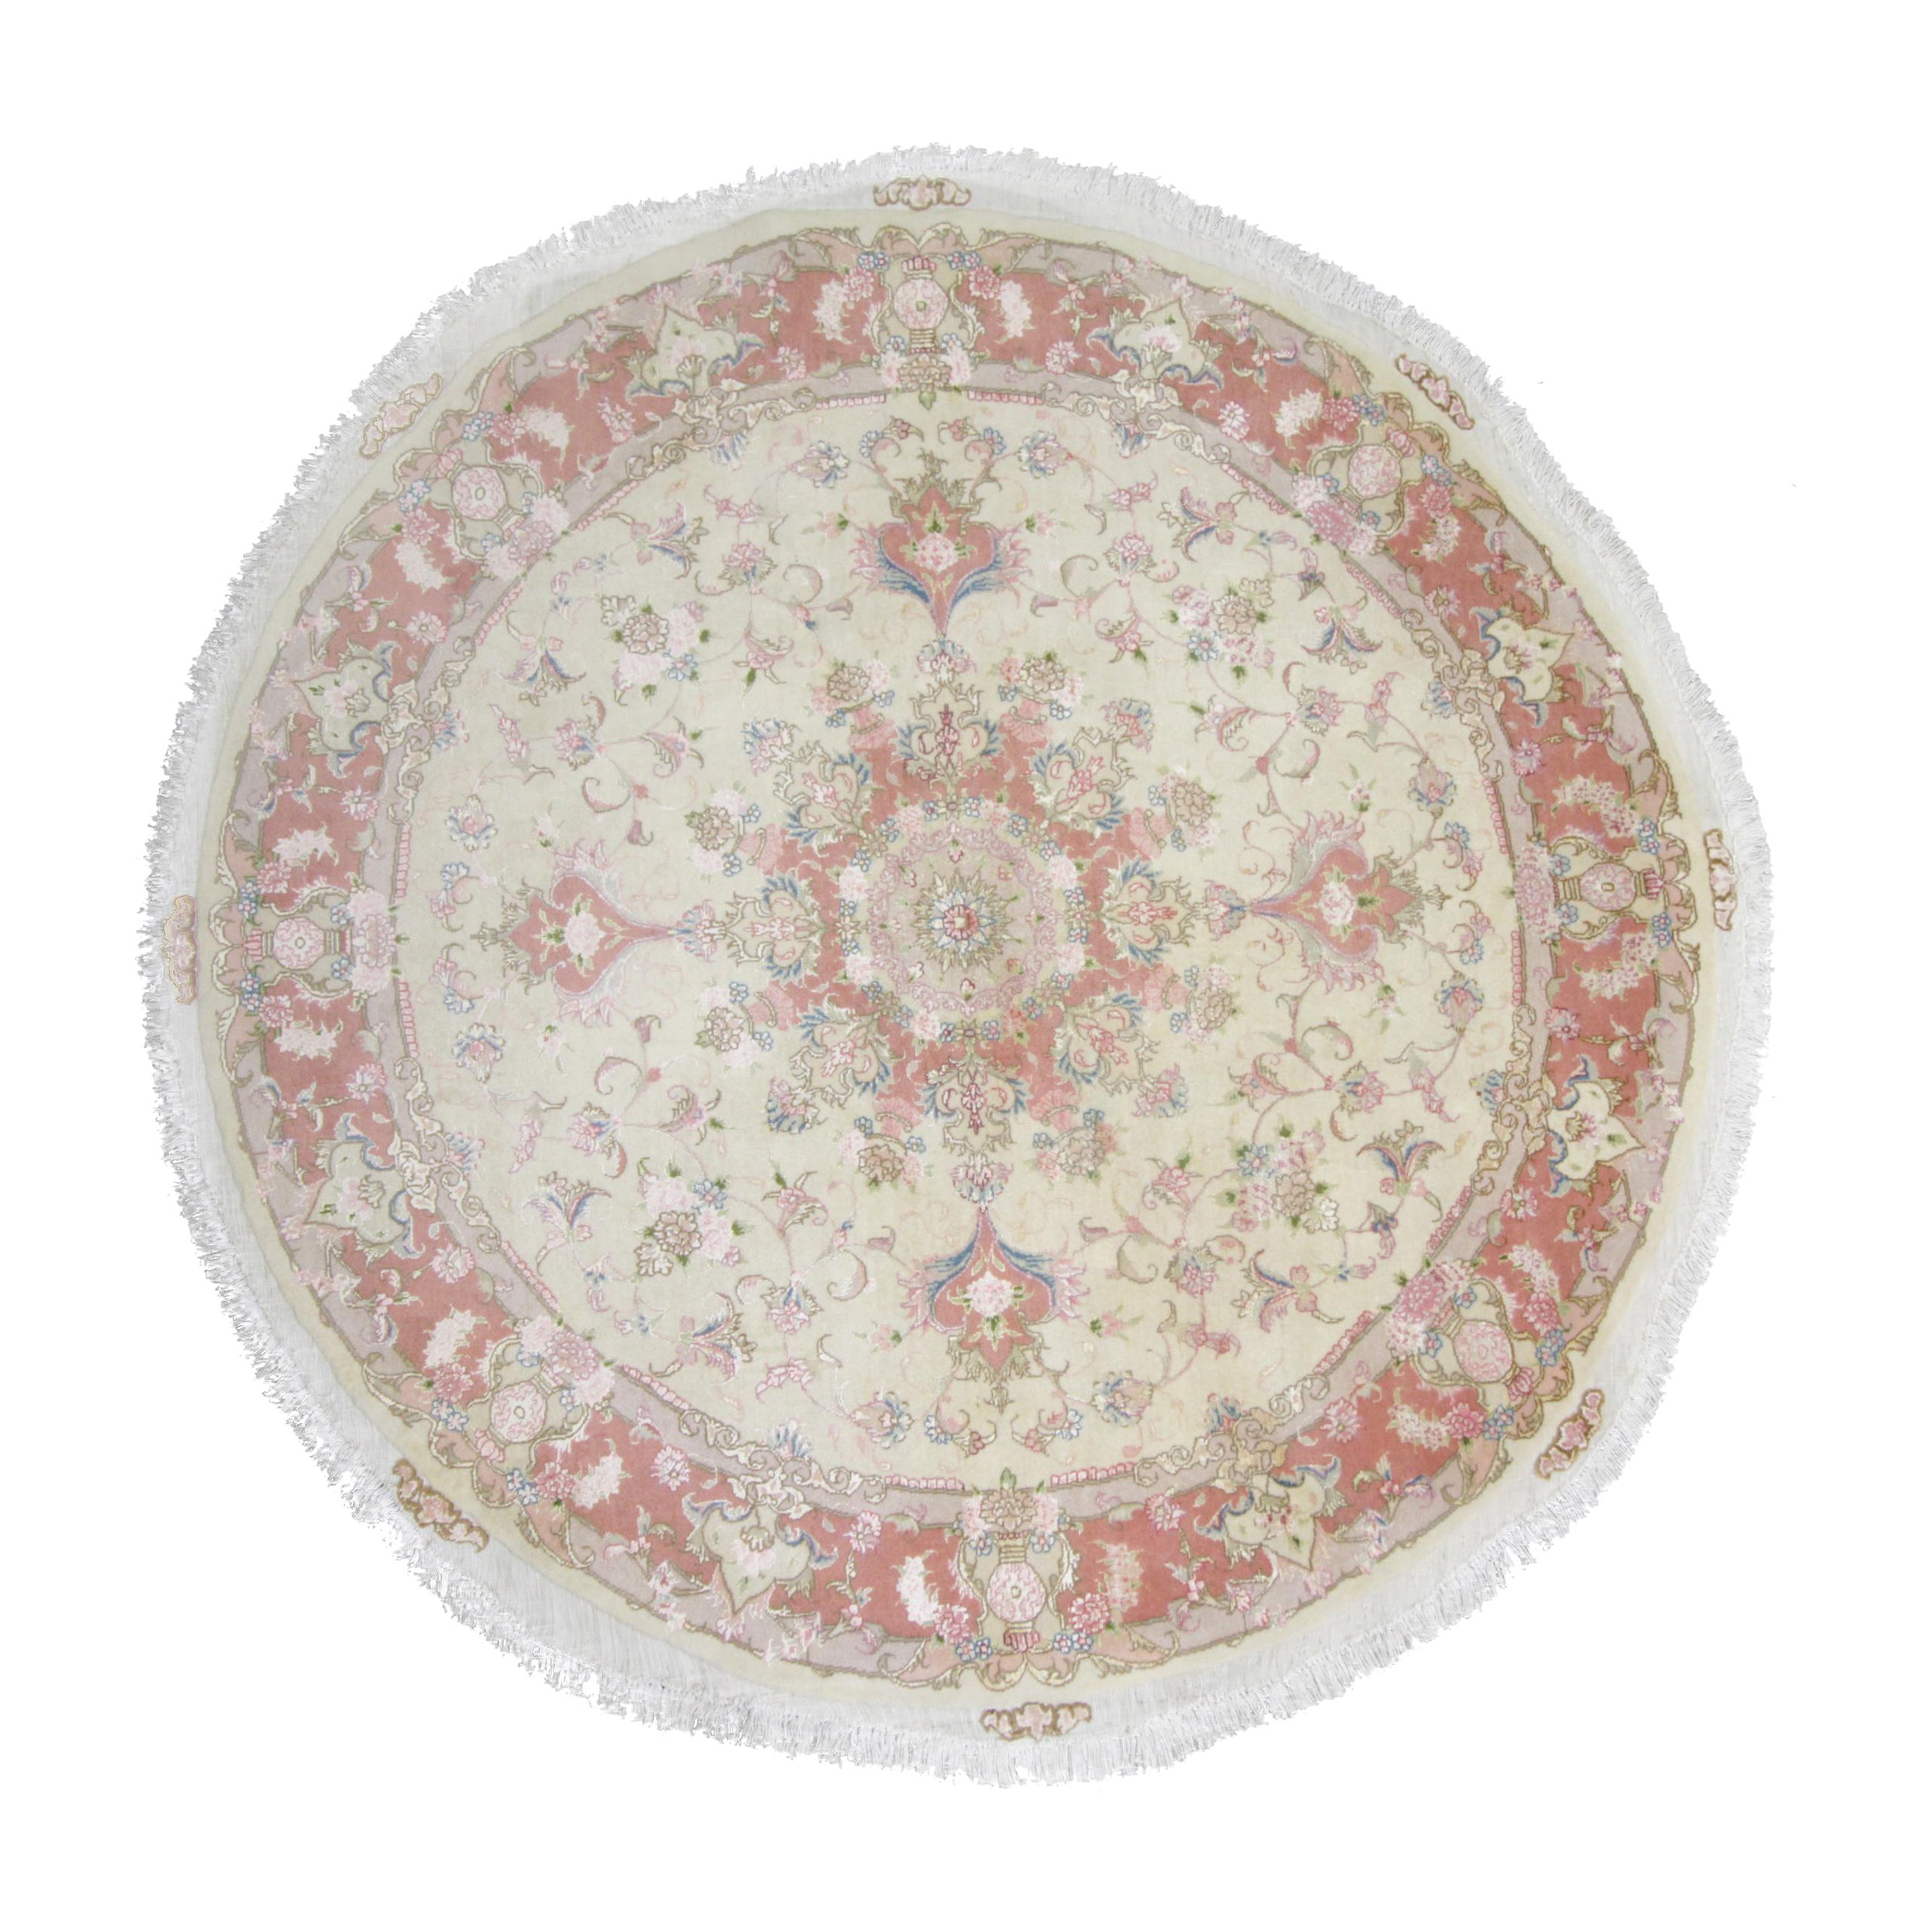 Circular Turkish Wool and Silk Rug, Oriental Cream Pink Handmade Carpet